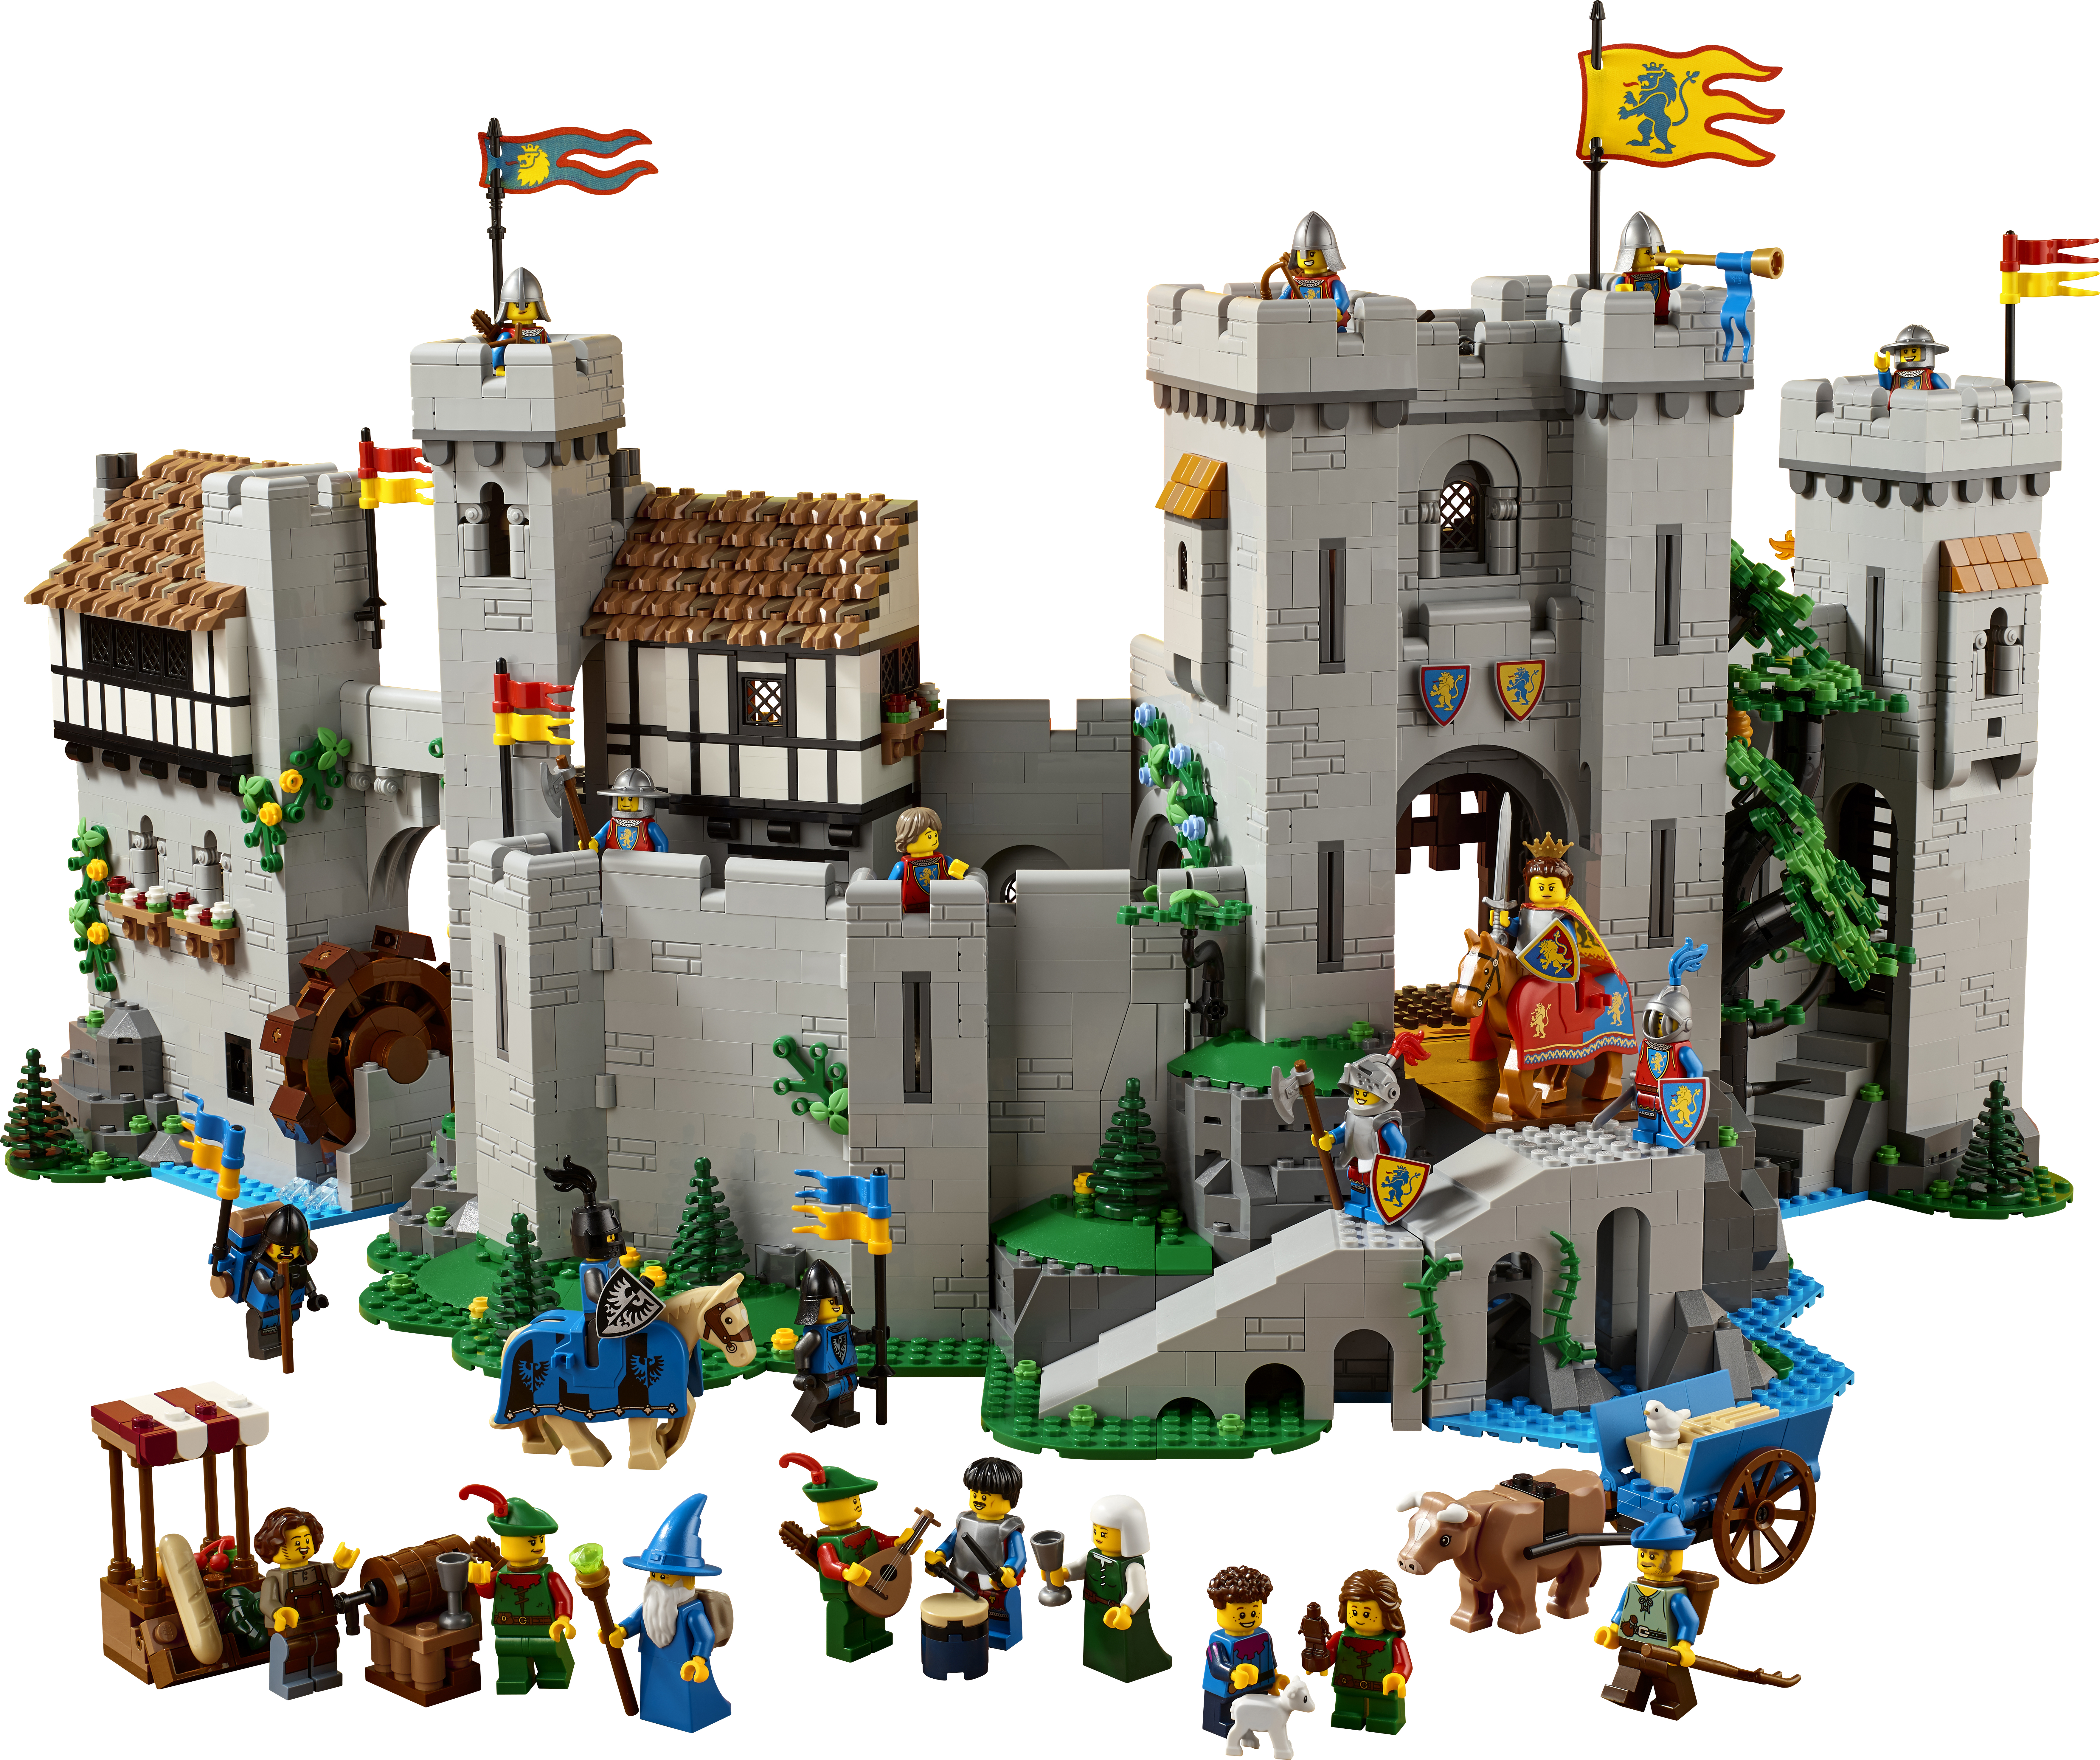 10 NEW LEGO CASTLE KNIGHT MINIFIG LOT Kingdoms figures minifigures people  cross